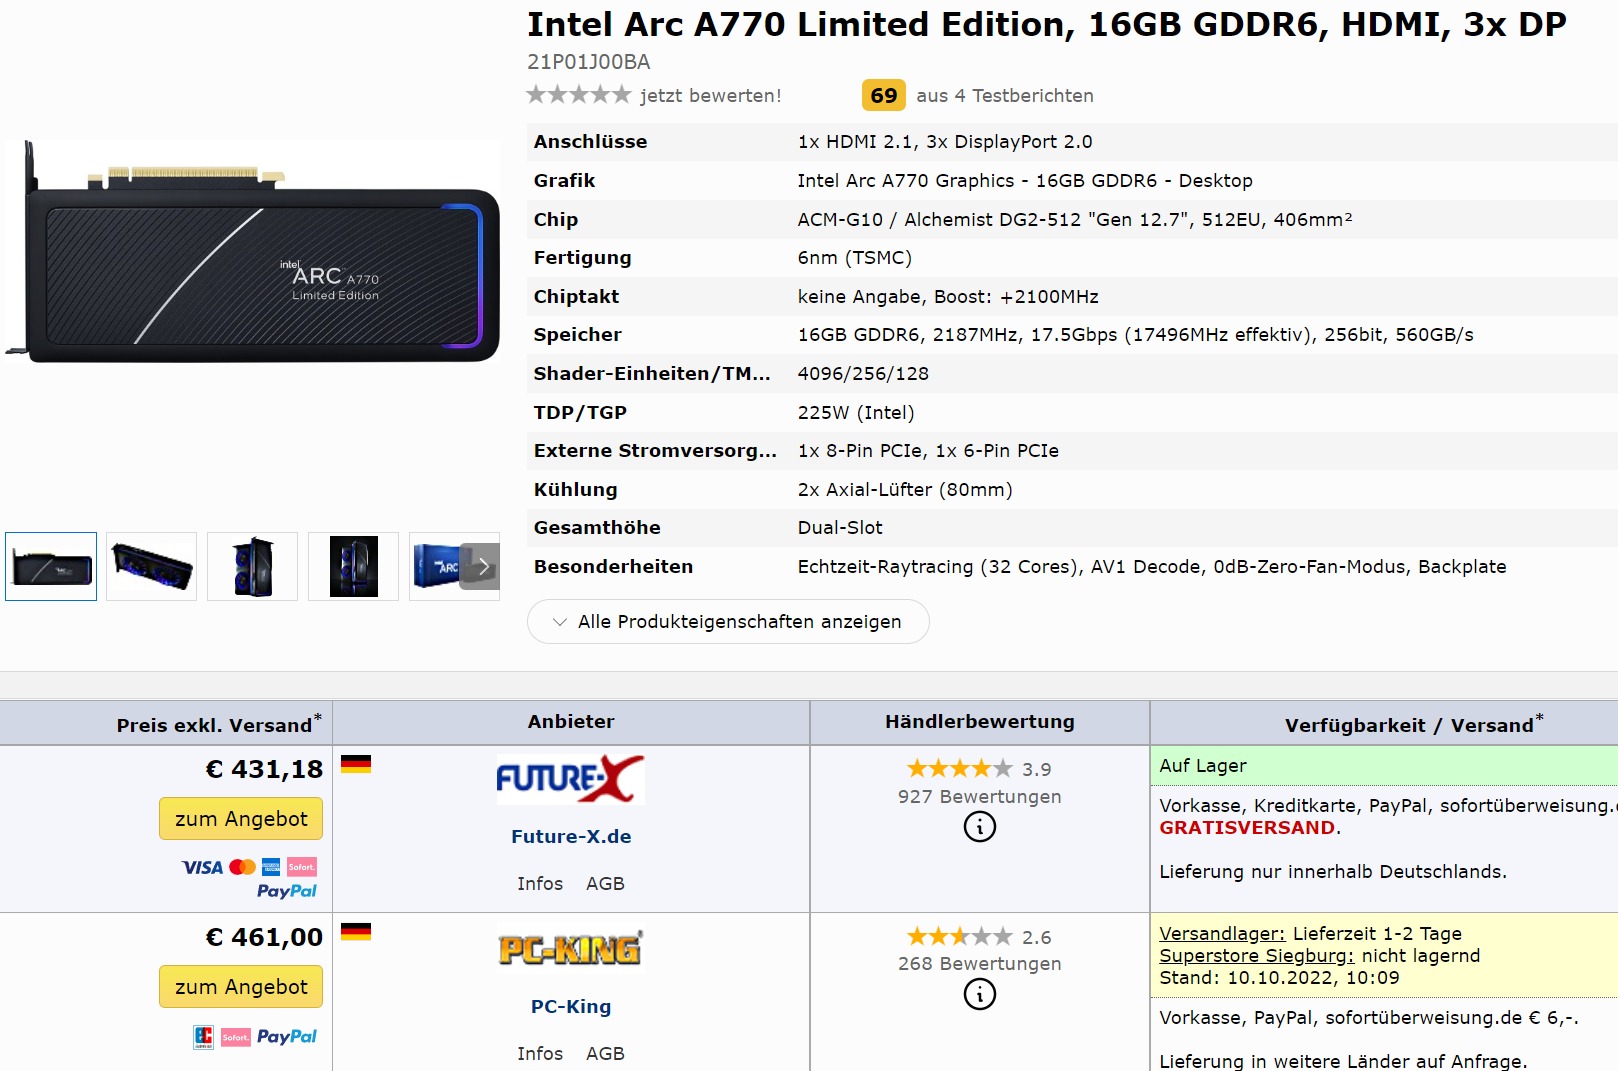 intel arc a770 eu germany price1 เผยการ์ดจอ Intel Arc A770 Limited Edition รุ่นใหม่ล่าสุดวางจำหน่ายที่ราคา 431 EUR ยูโรที่ประเทศเยอรมันนี